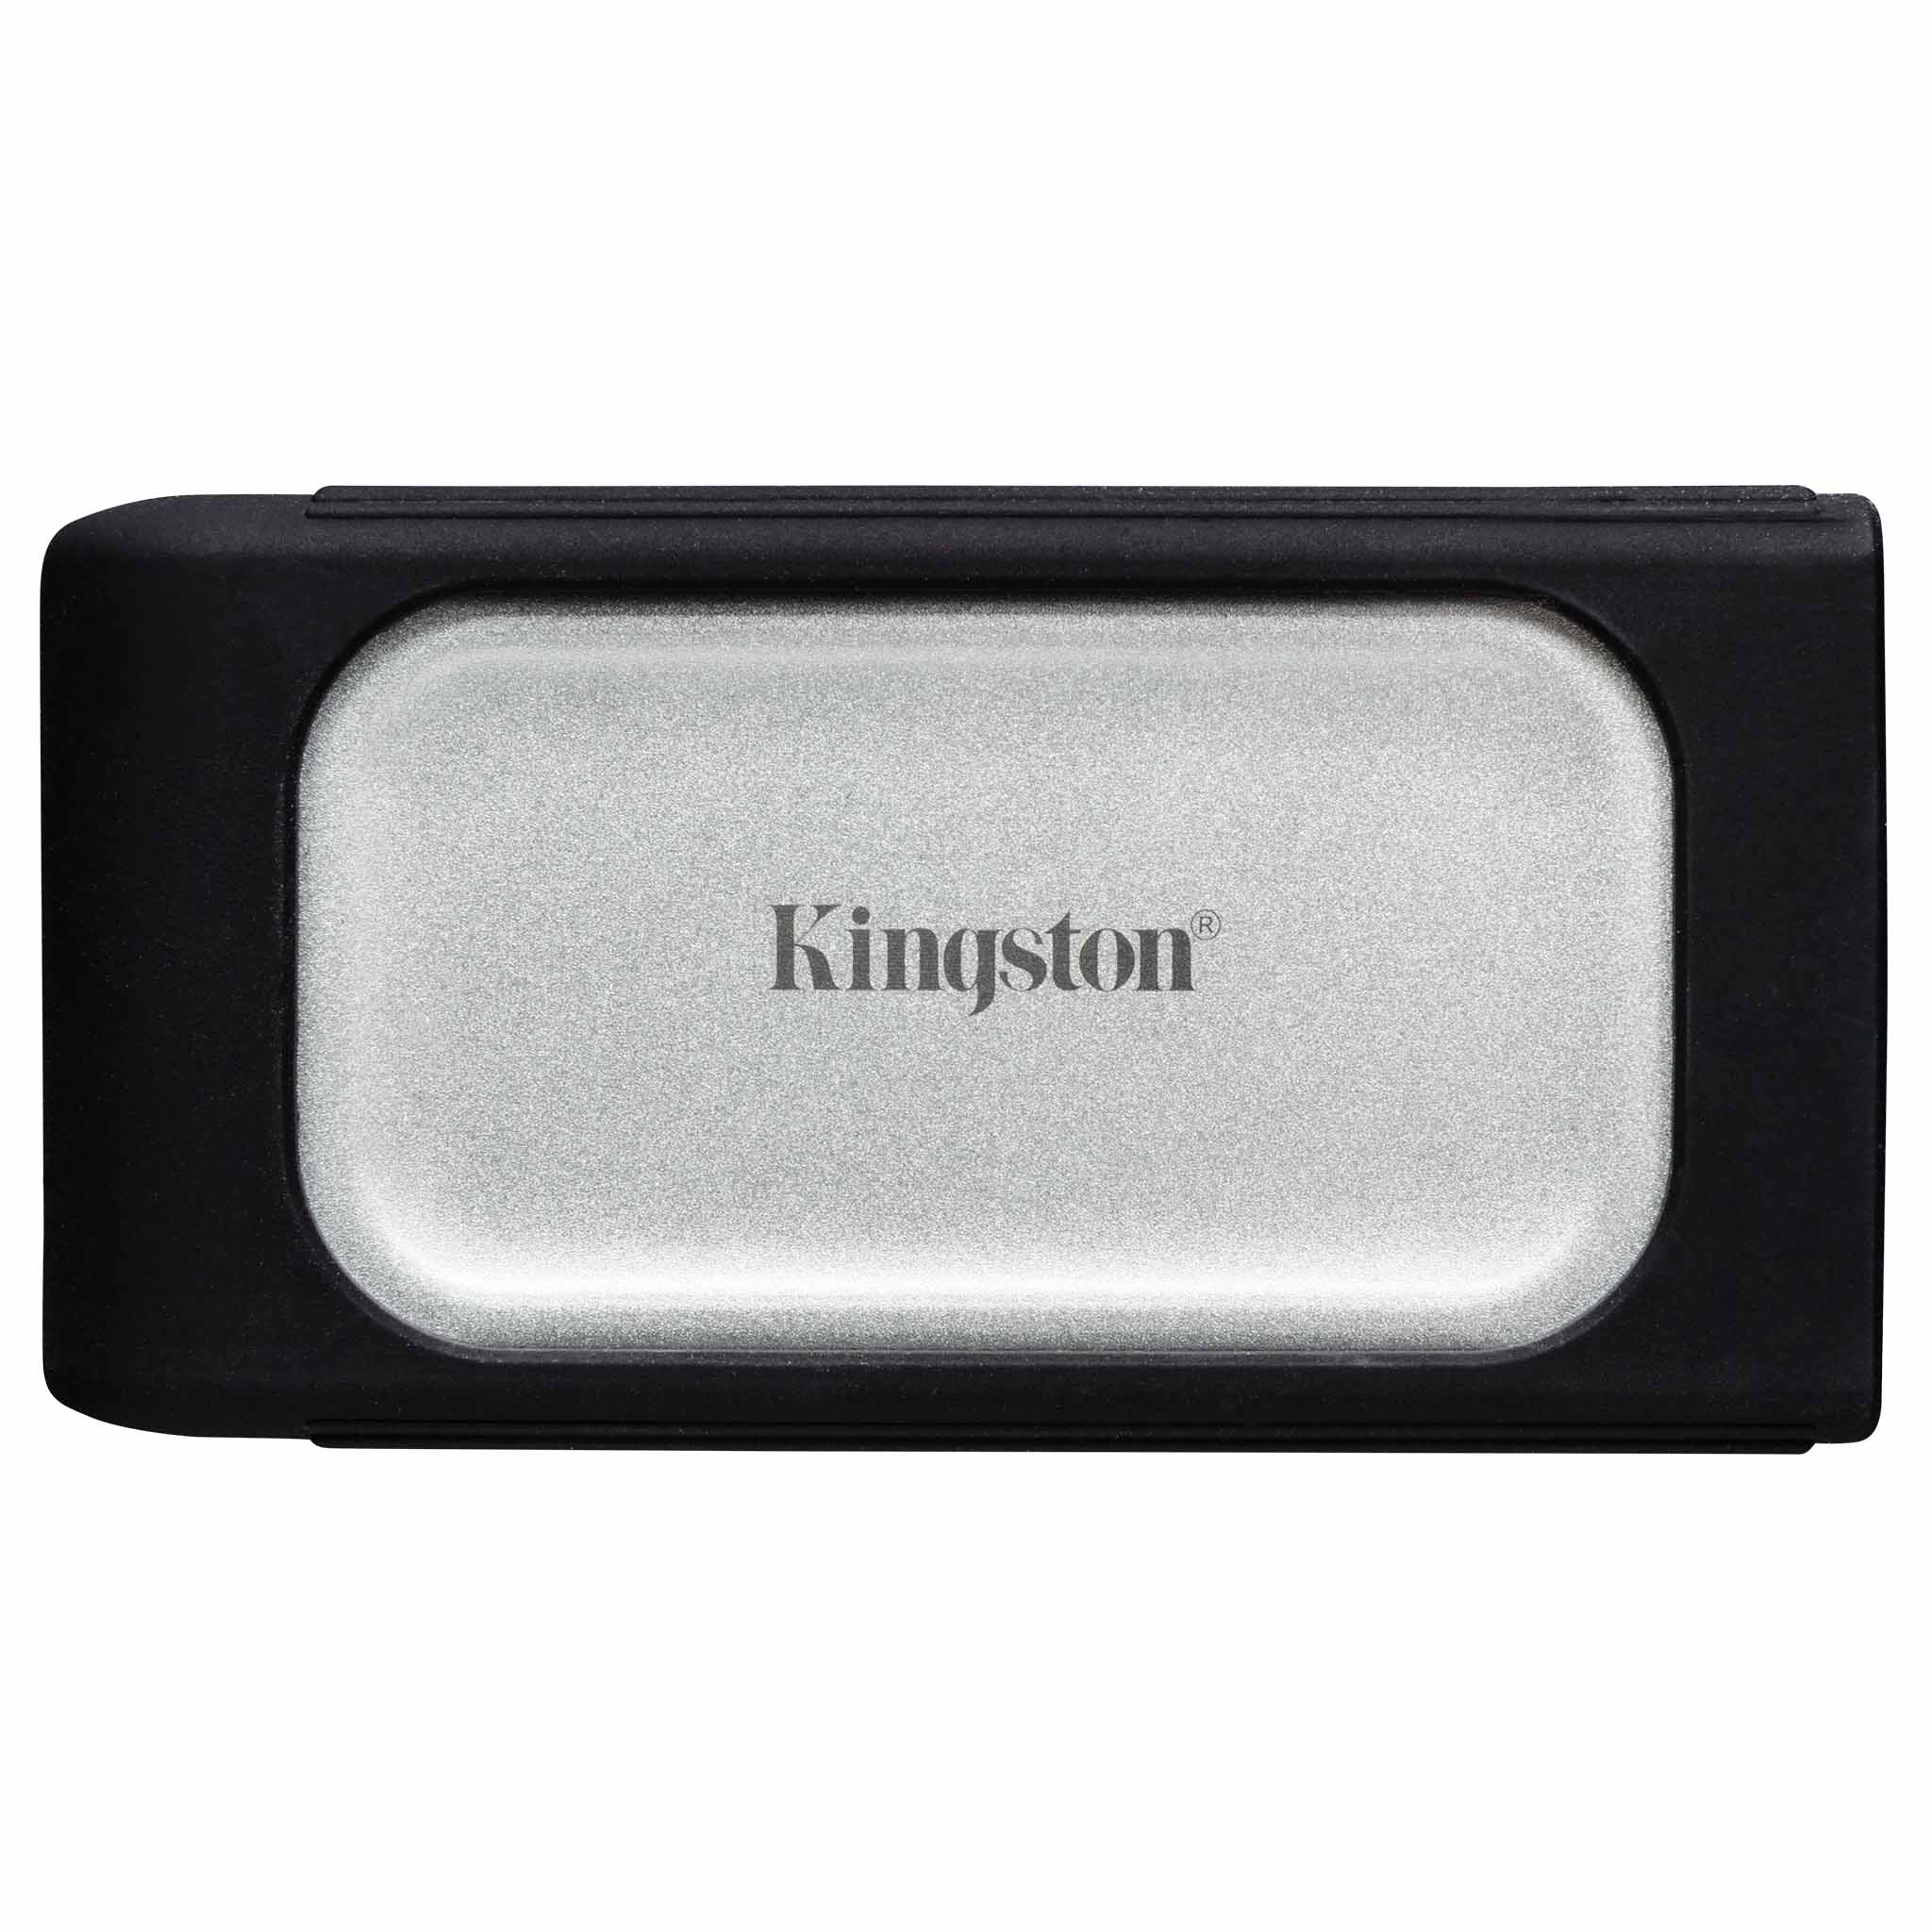 HDD vs External SSD - Kingston Technology